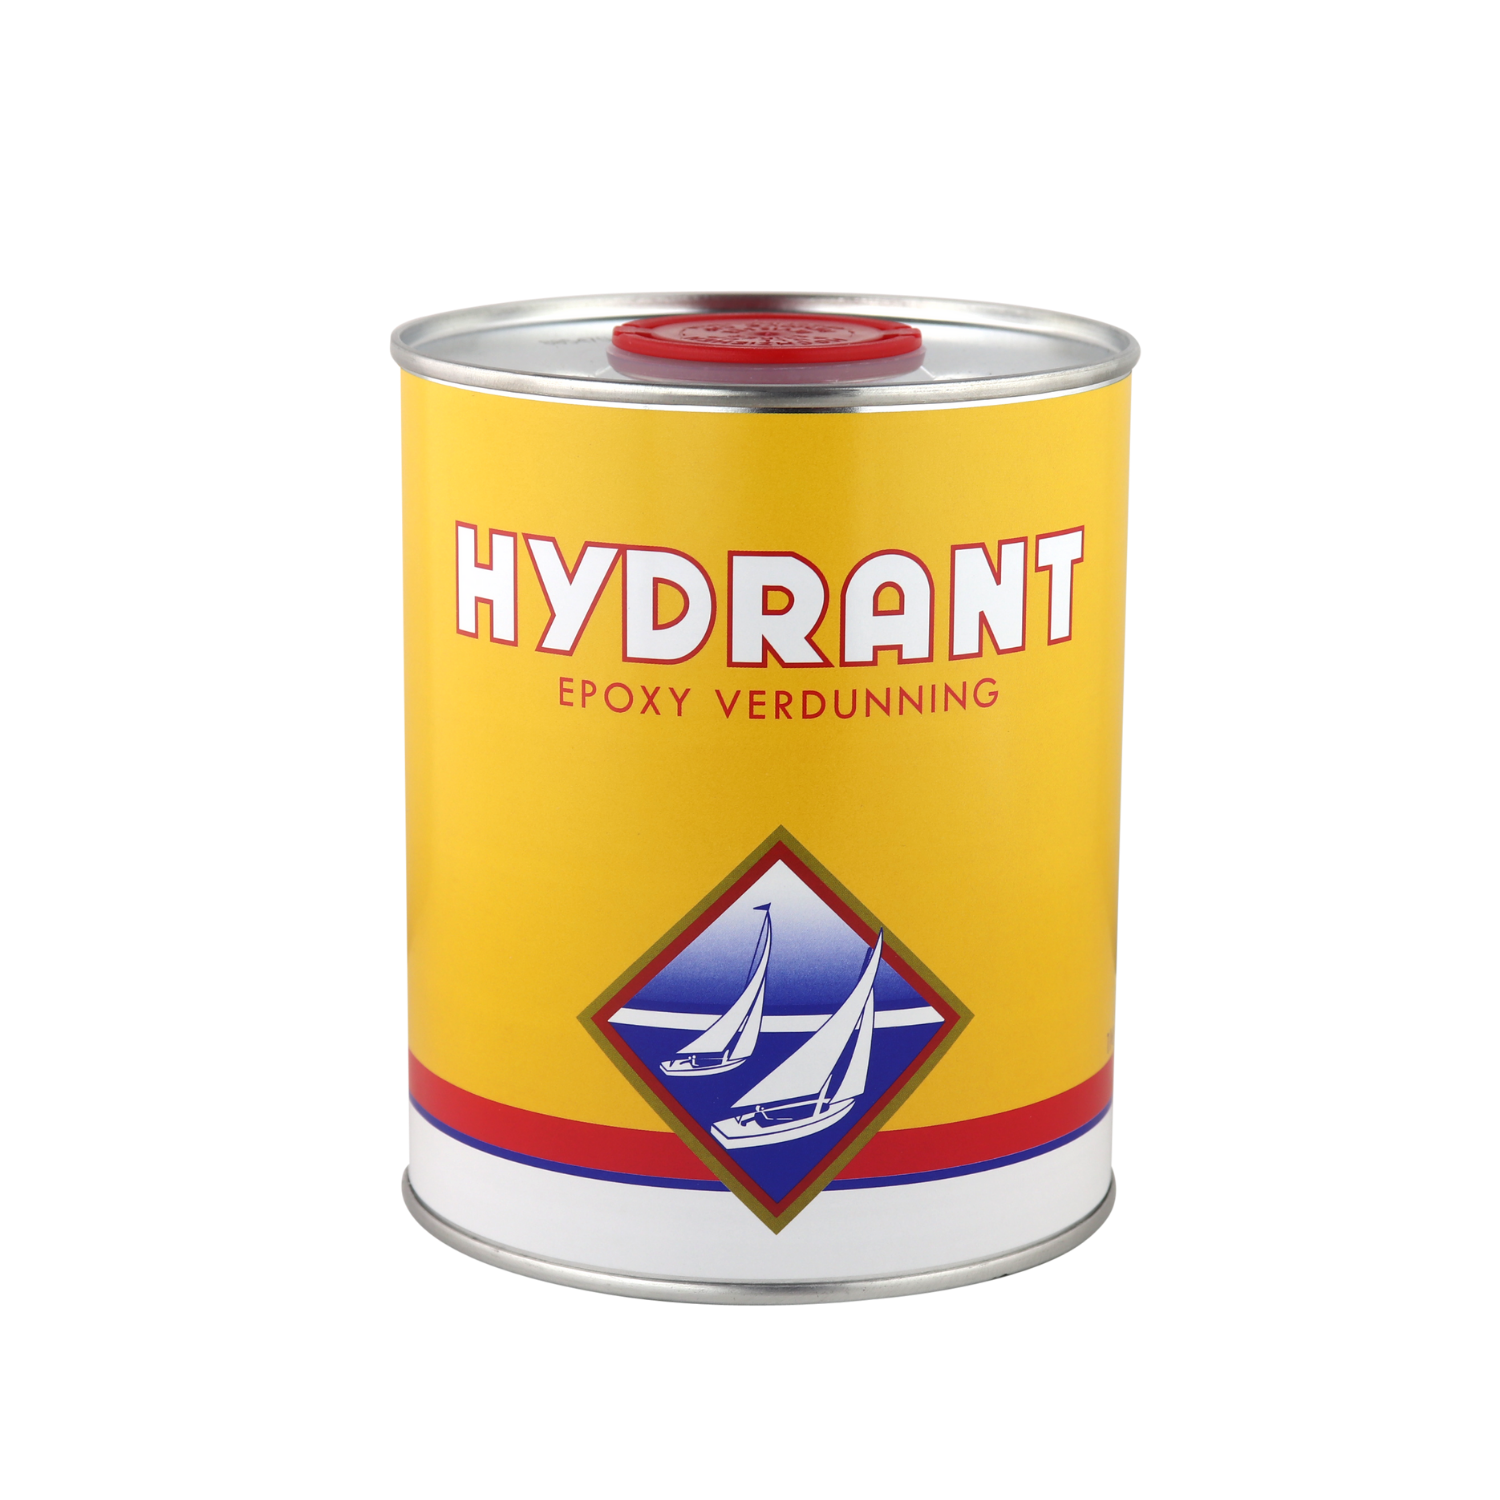 Hydrant epoxy verdunning